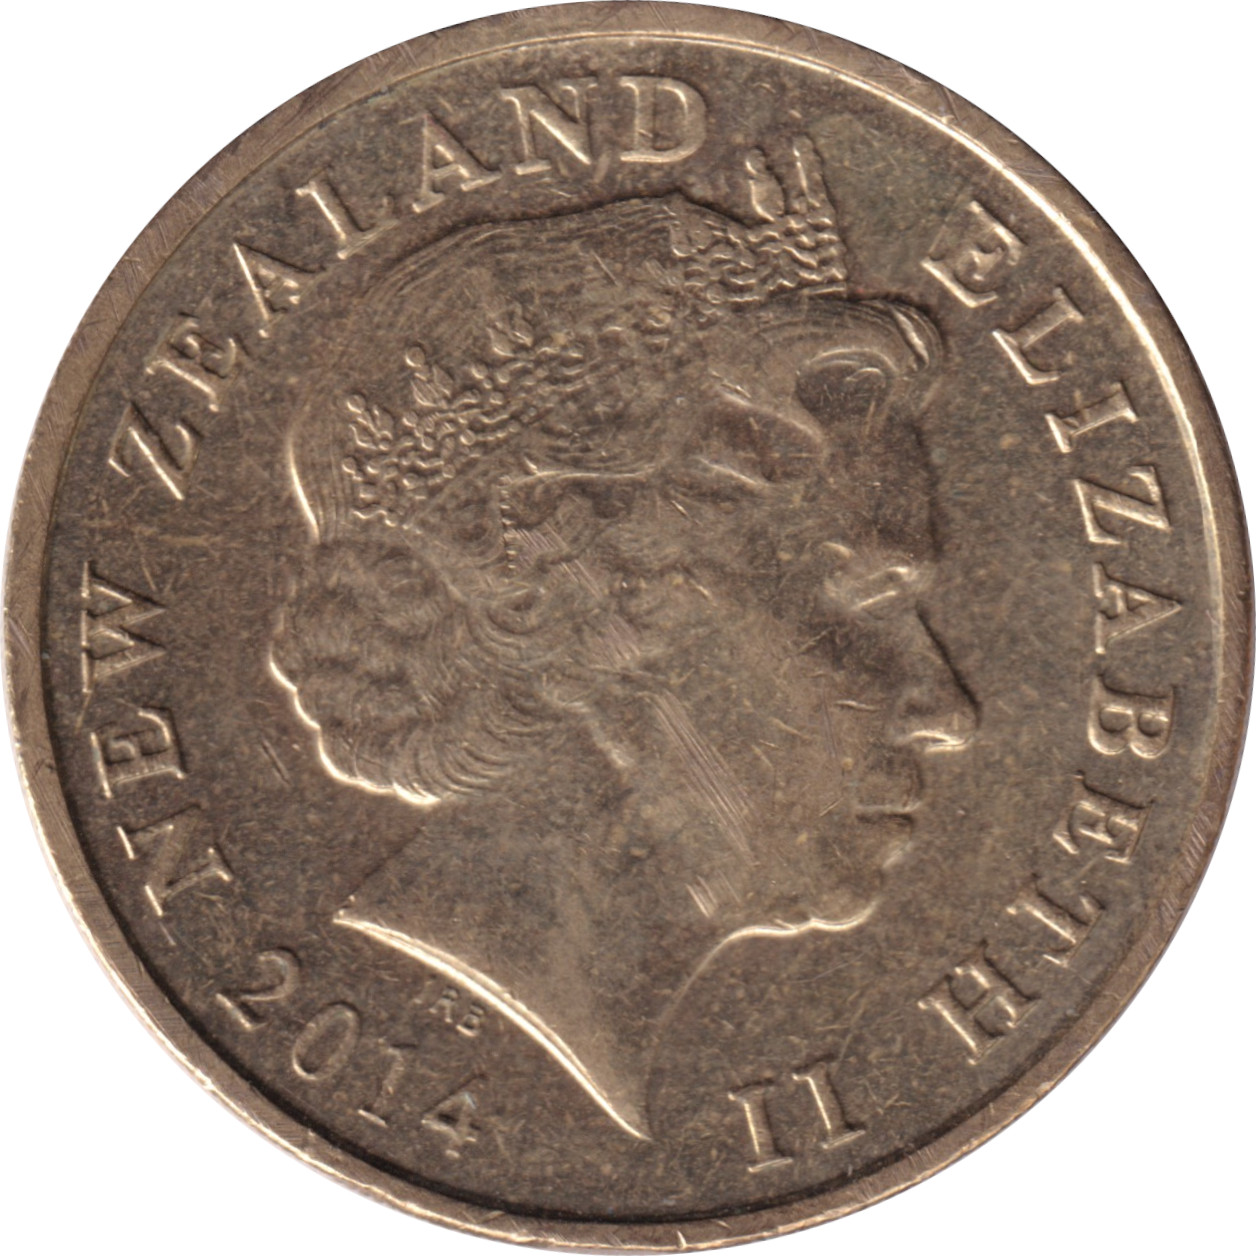 2 dollars - Elizabeth II - Tête agée